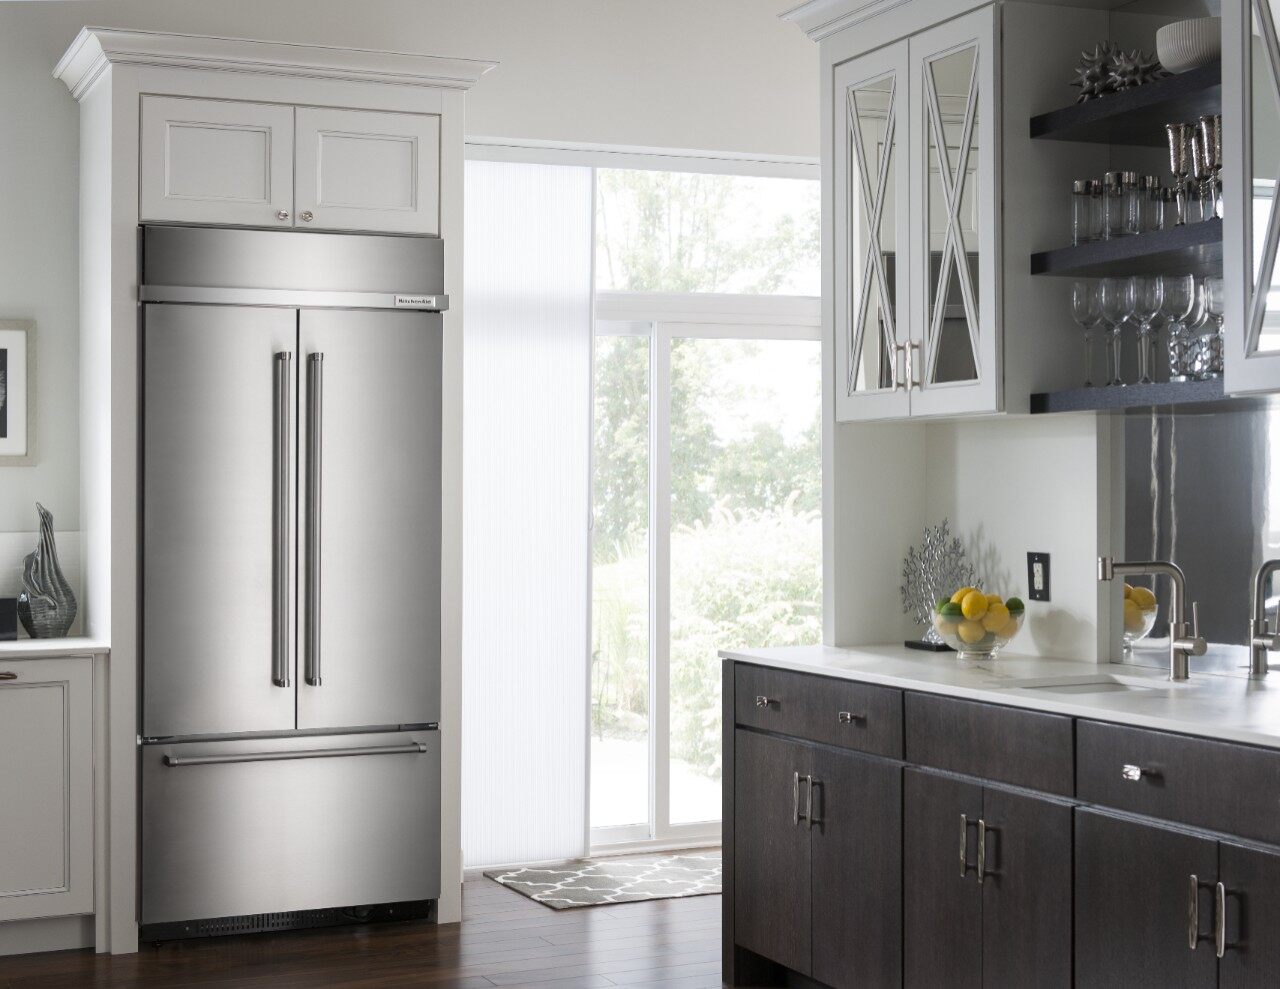 Urner's Guide to the 5 Best French Door Refrigerators Urner's